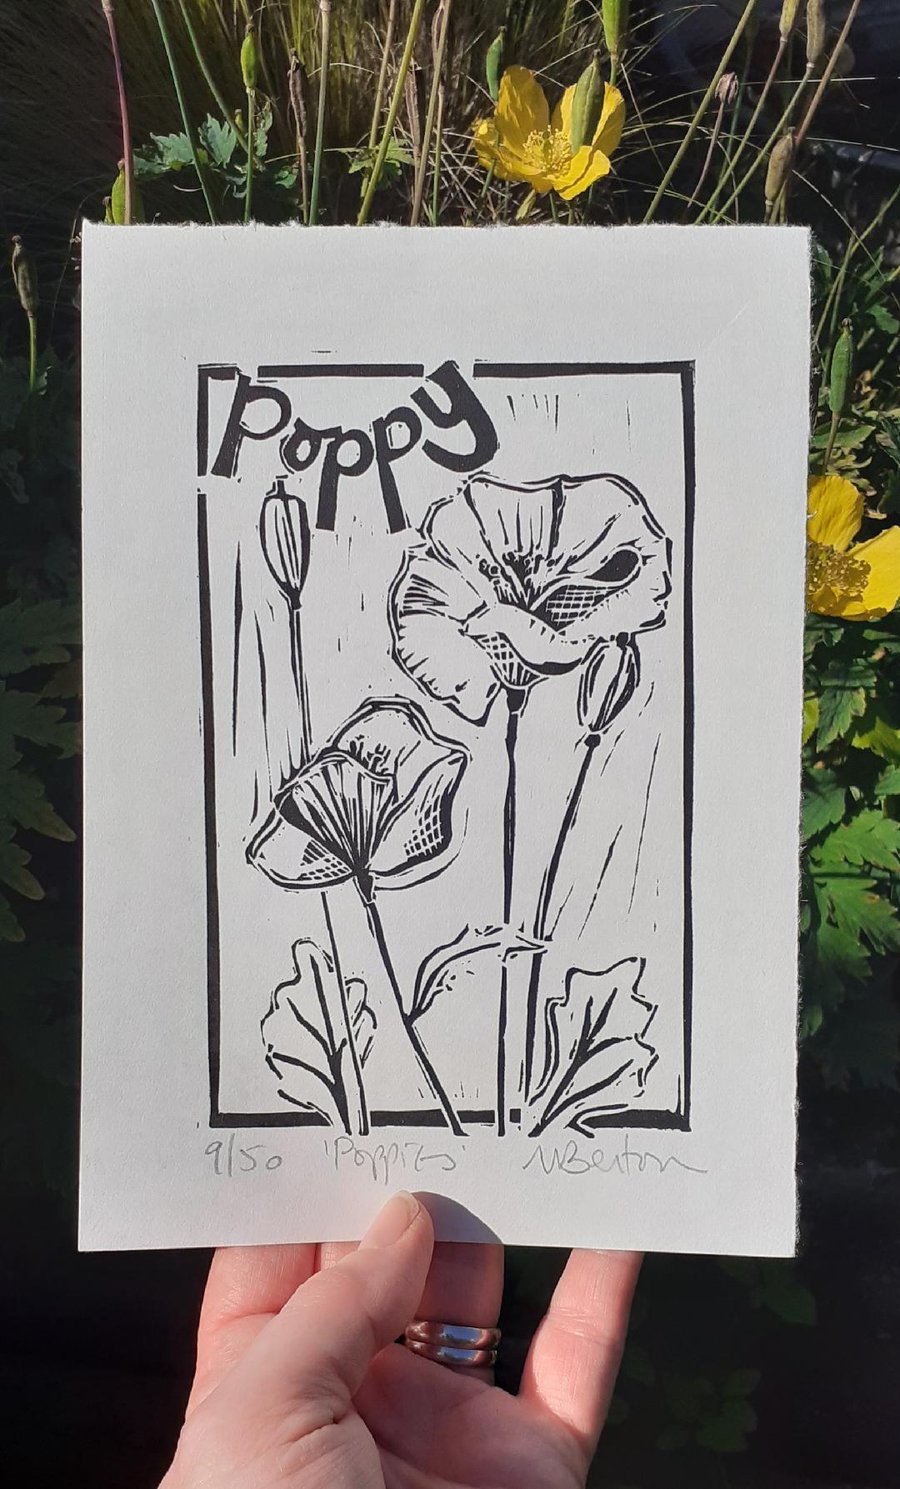 'Poppies' Small Lino Print